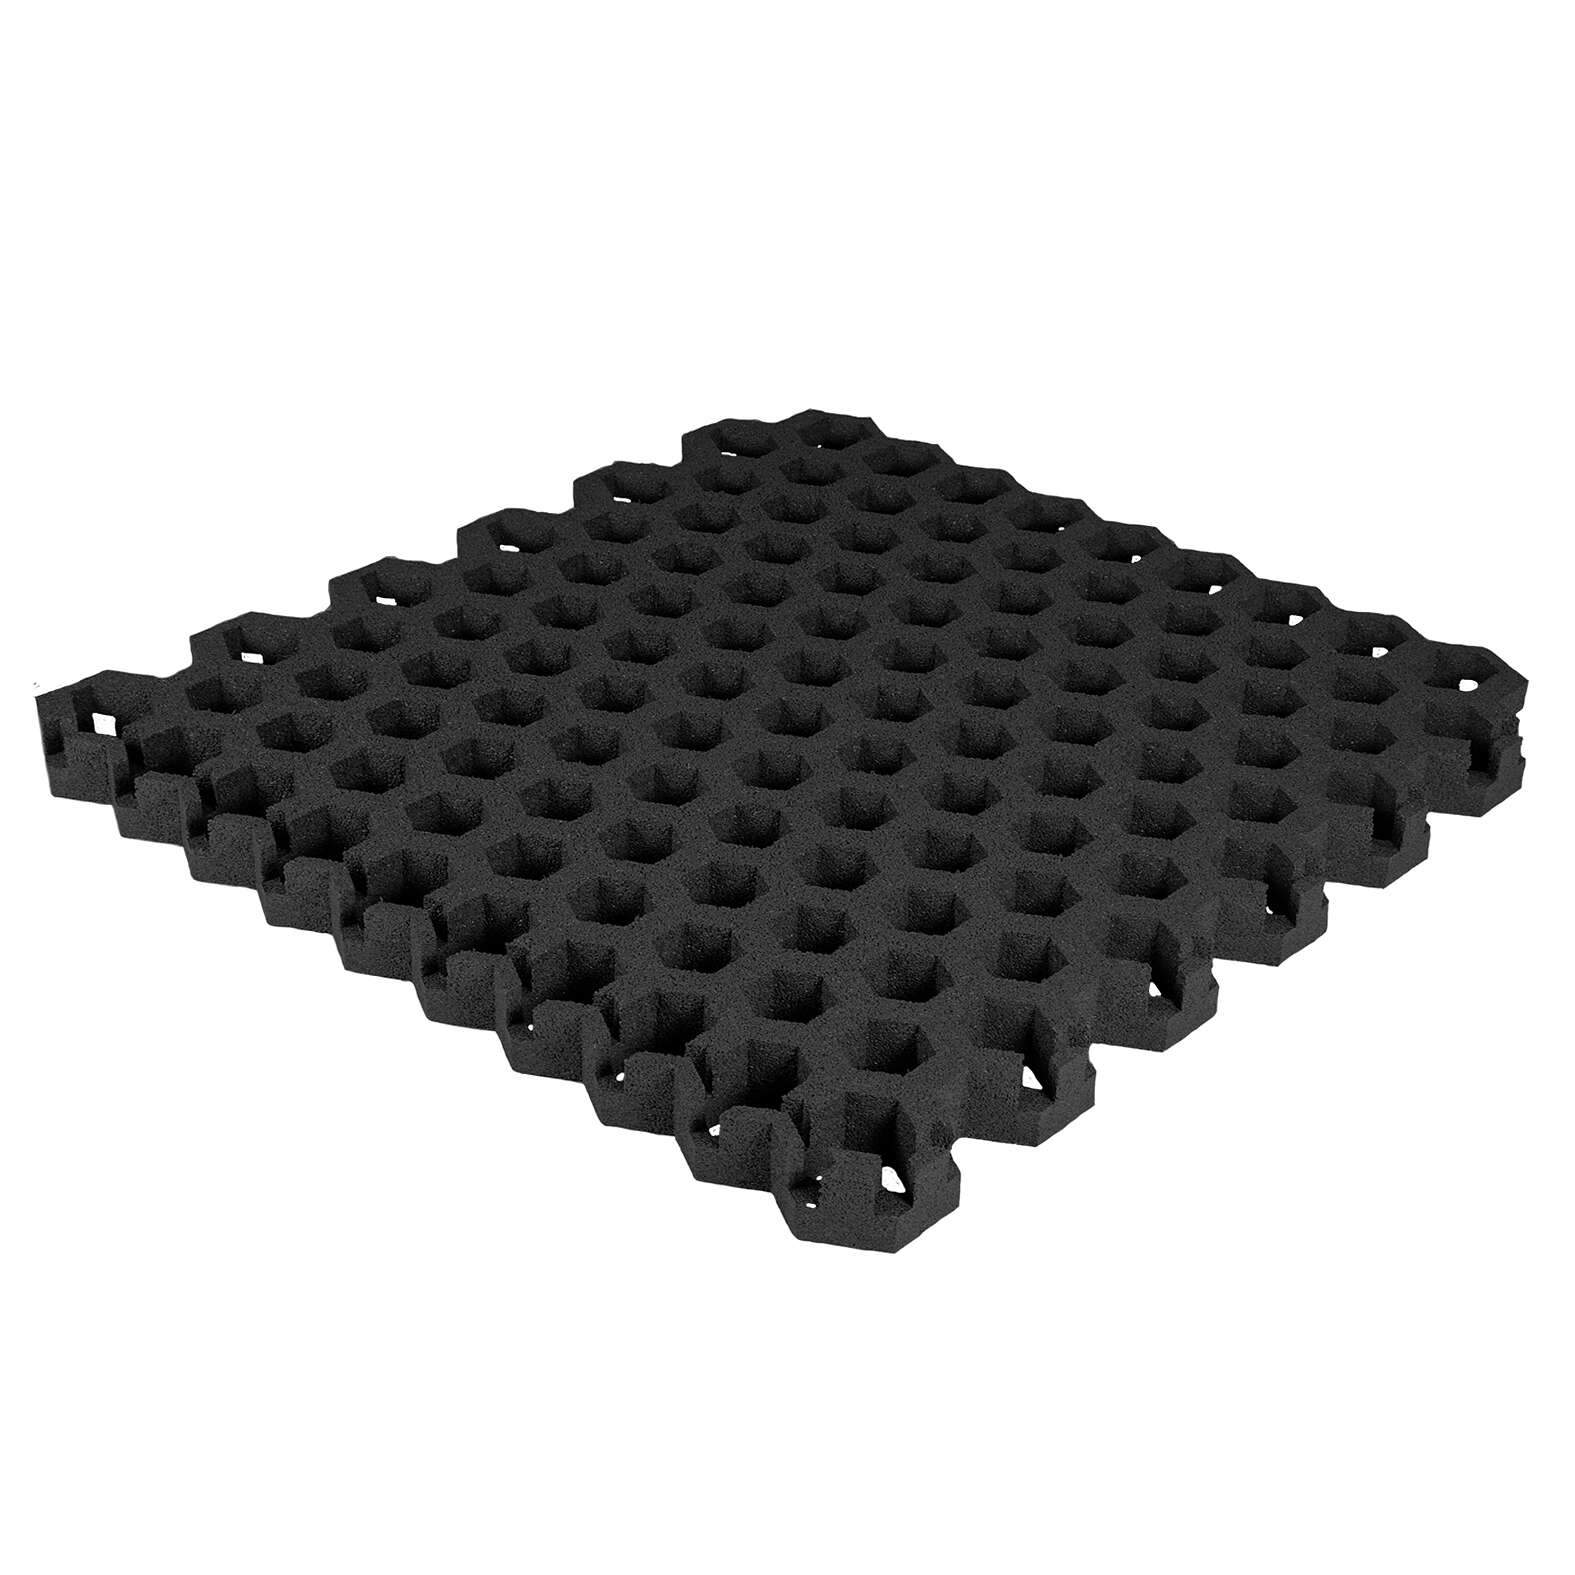 Gum-tech Rasengitter "Hexagon", Schwarz, 6,5 cm von Gum-Tech